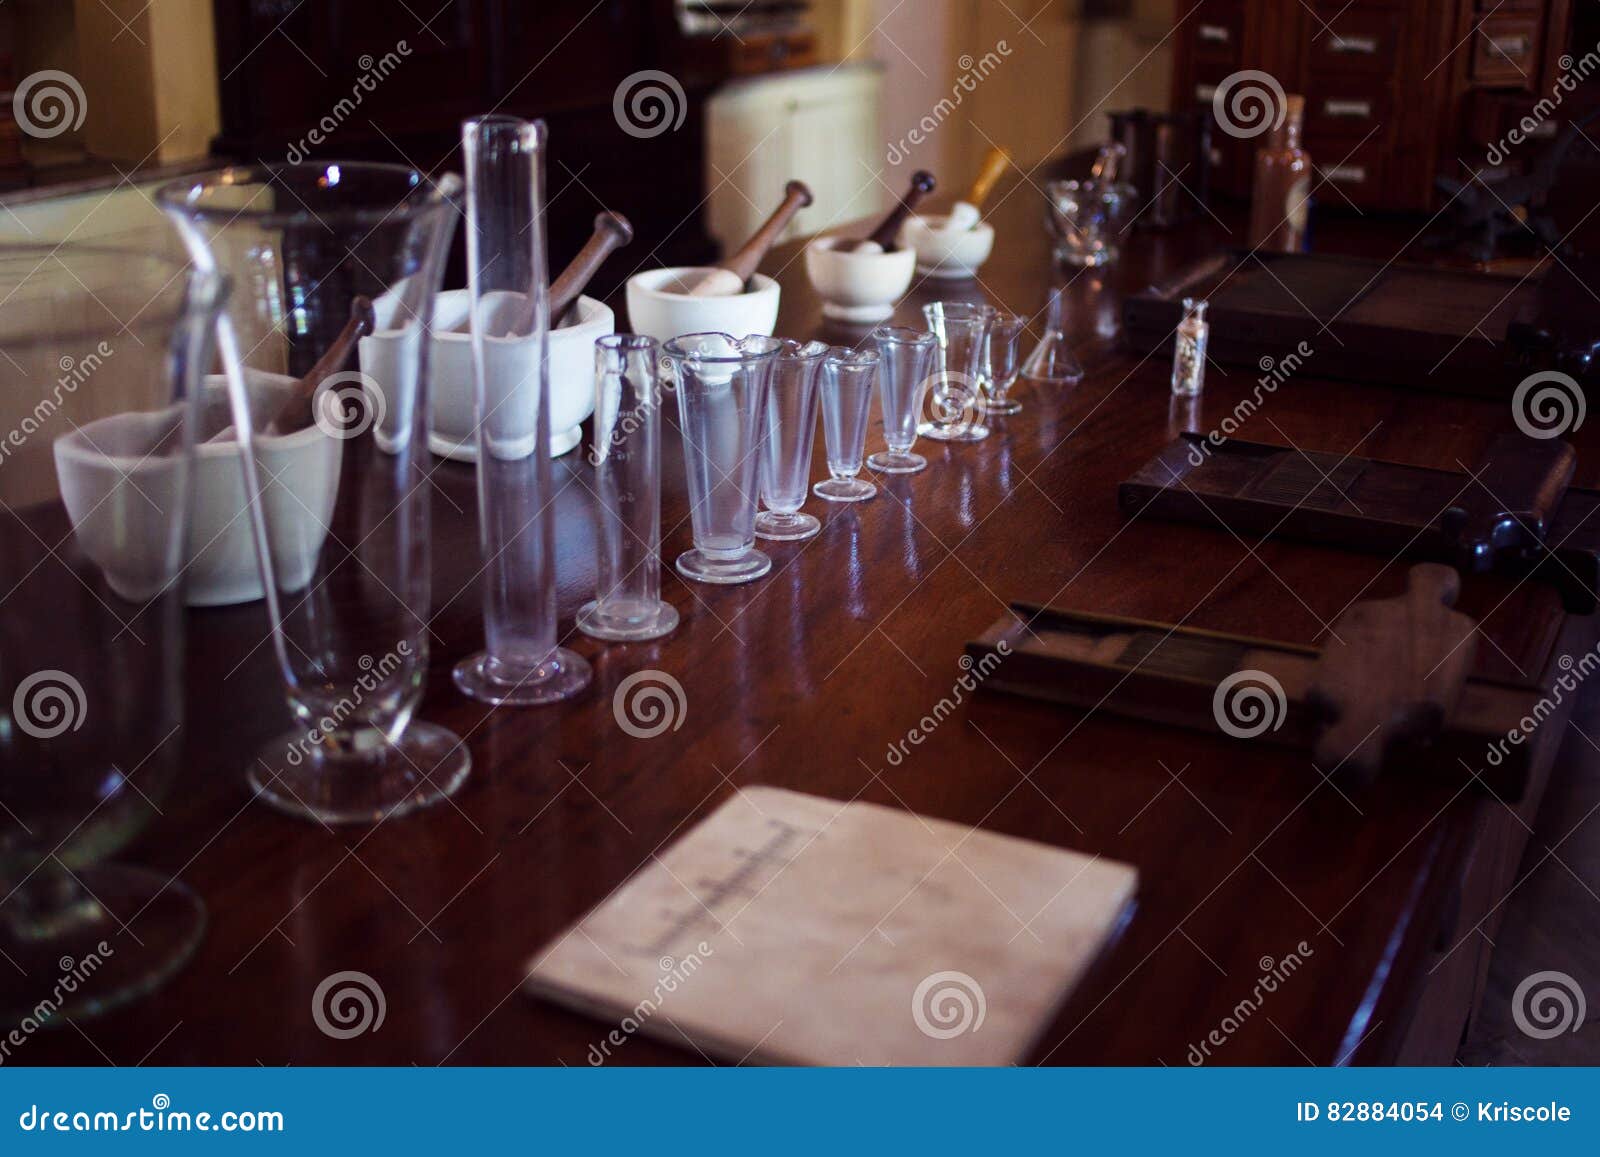 vintage ceramic mortar and beakers. chemical laboratory, pharmacy